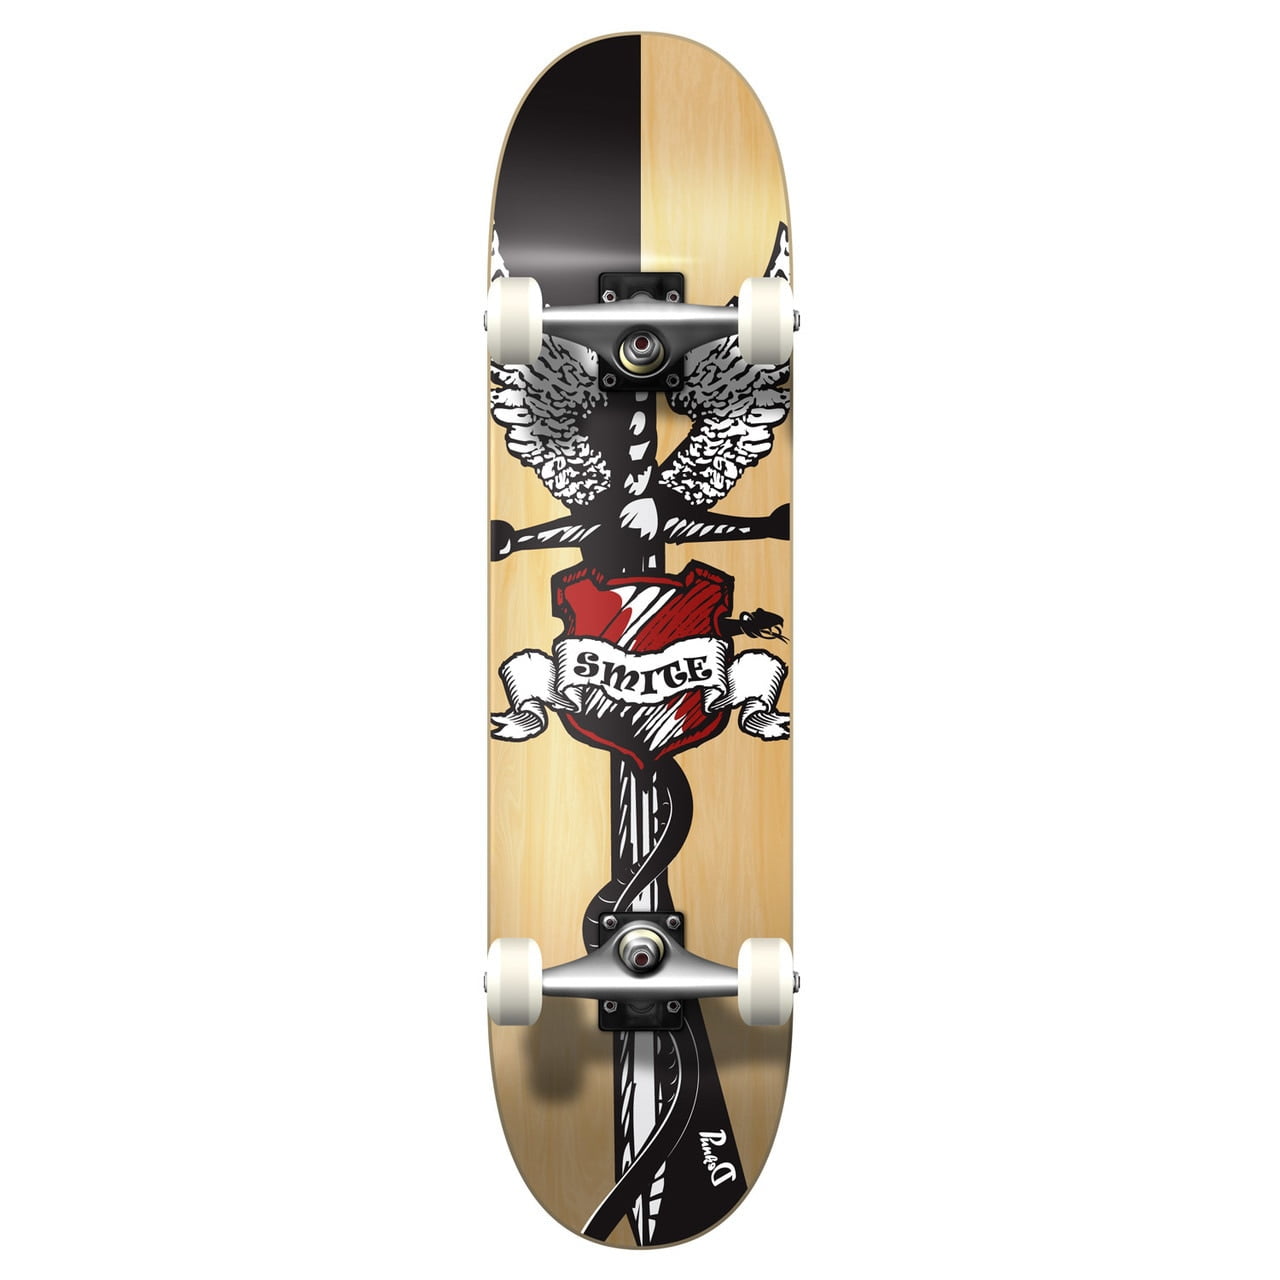 8.0 inch Bandana Red Yocaher Graphic Skateboard Deck 